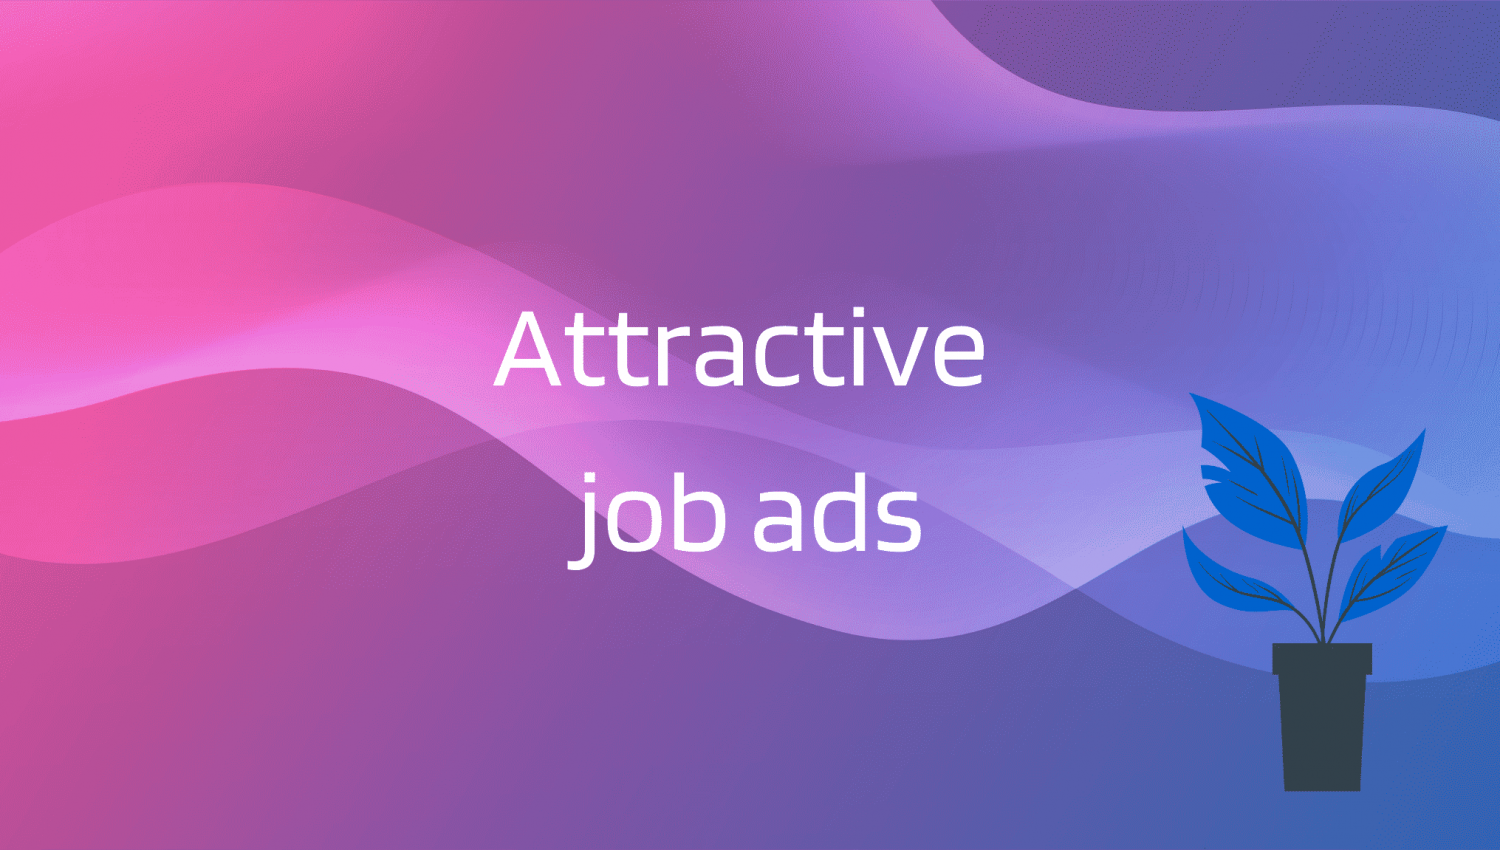 Attractive job ads